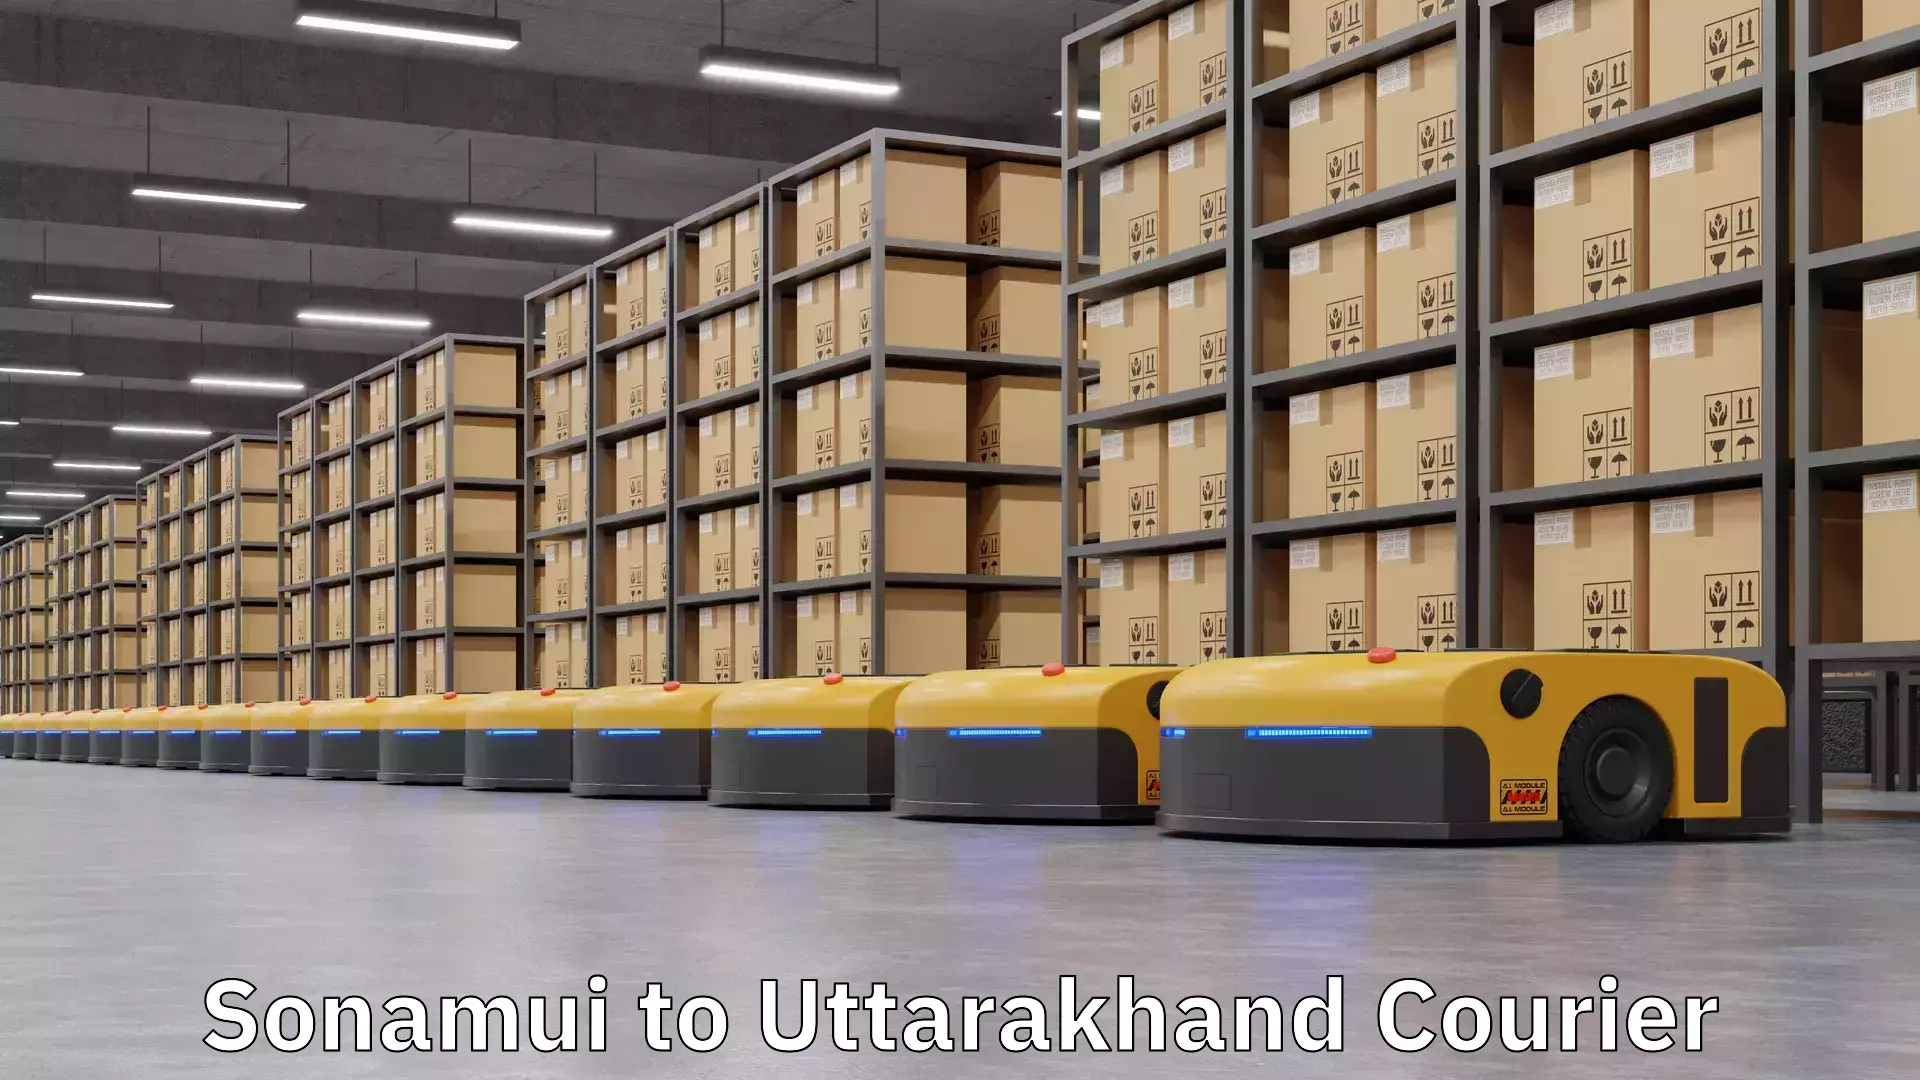 Efficient order fulfillment Sonamui to Uttarakhand